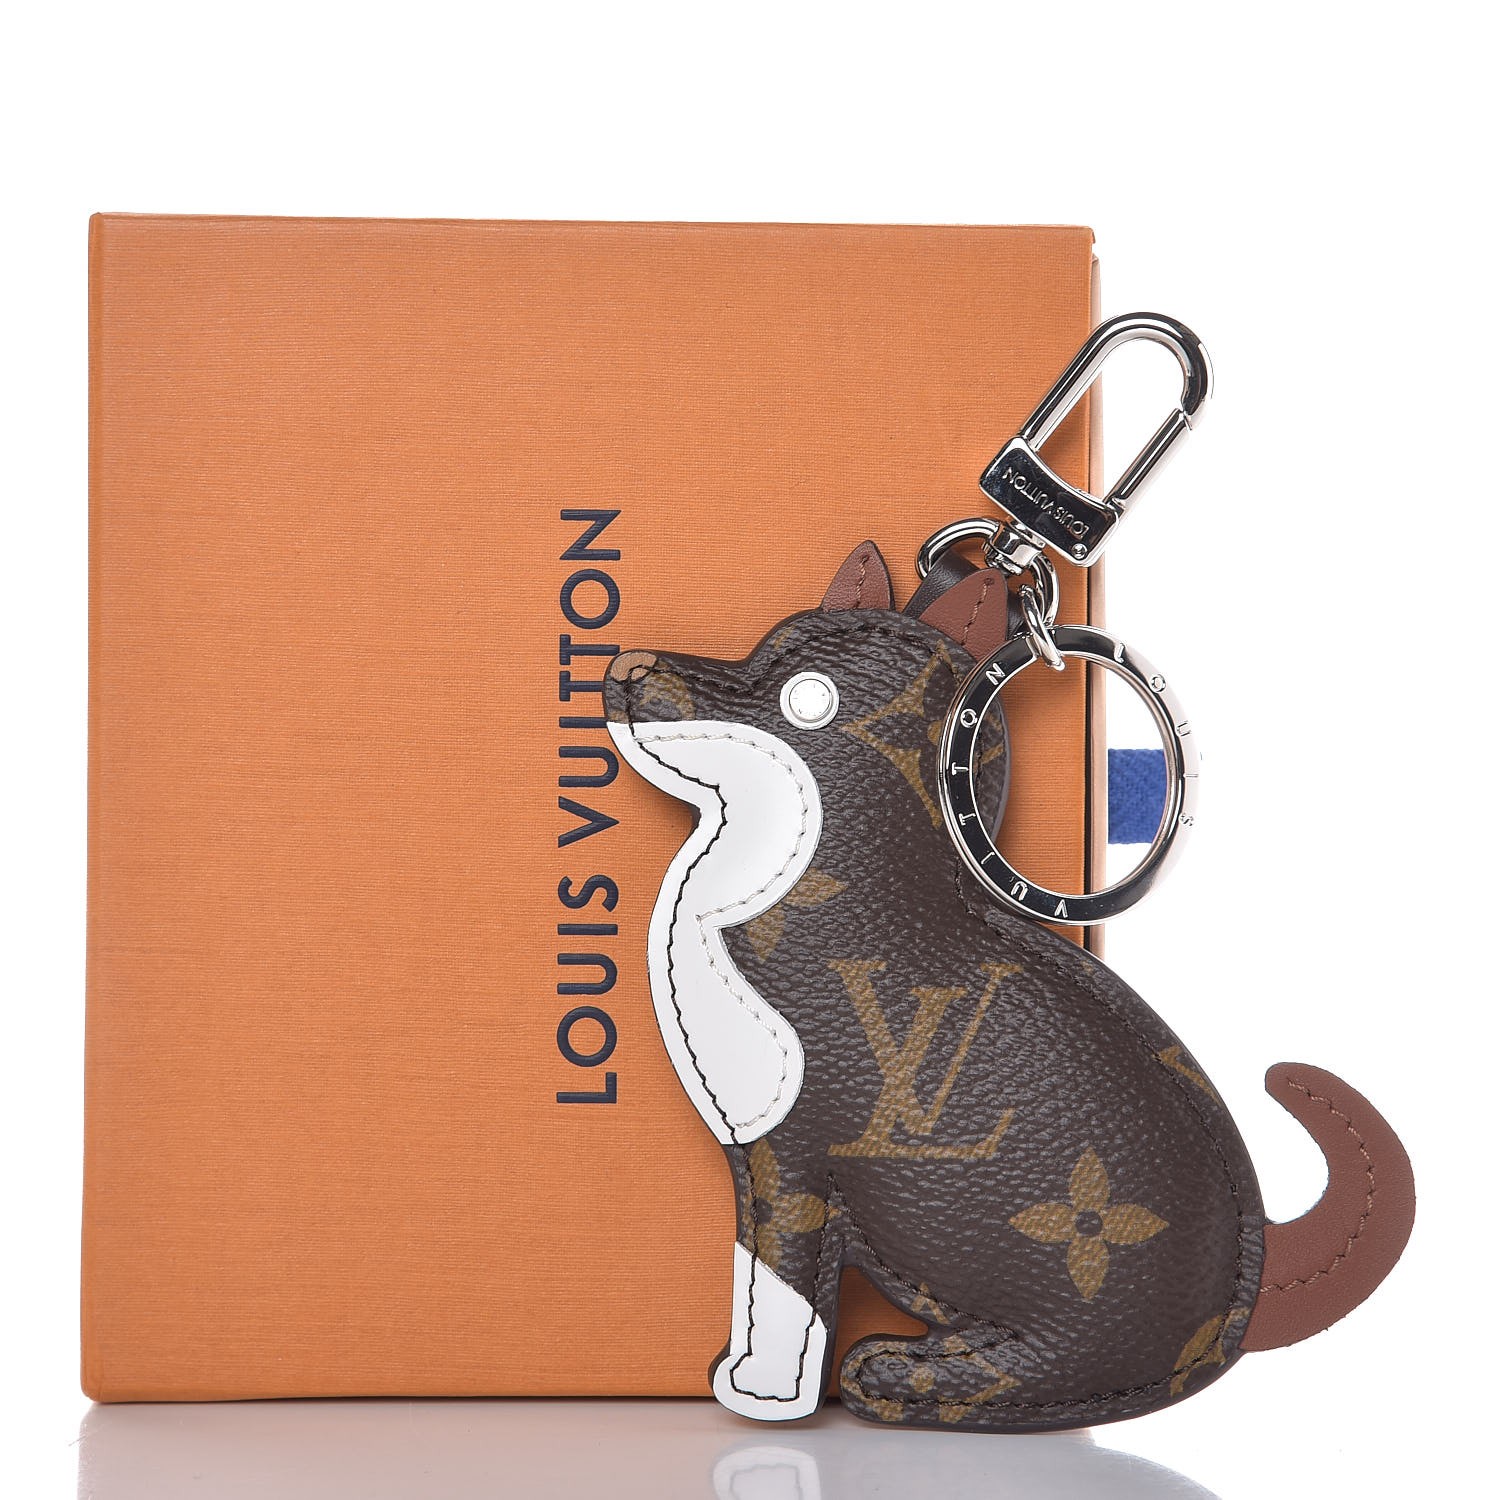 NEW Louis Vuitton Puppy Bag Charm and Key Holder tag Monogram LV